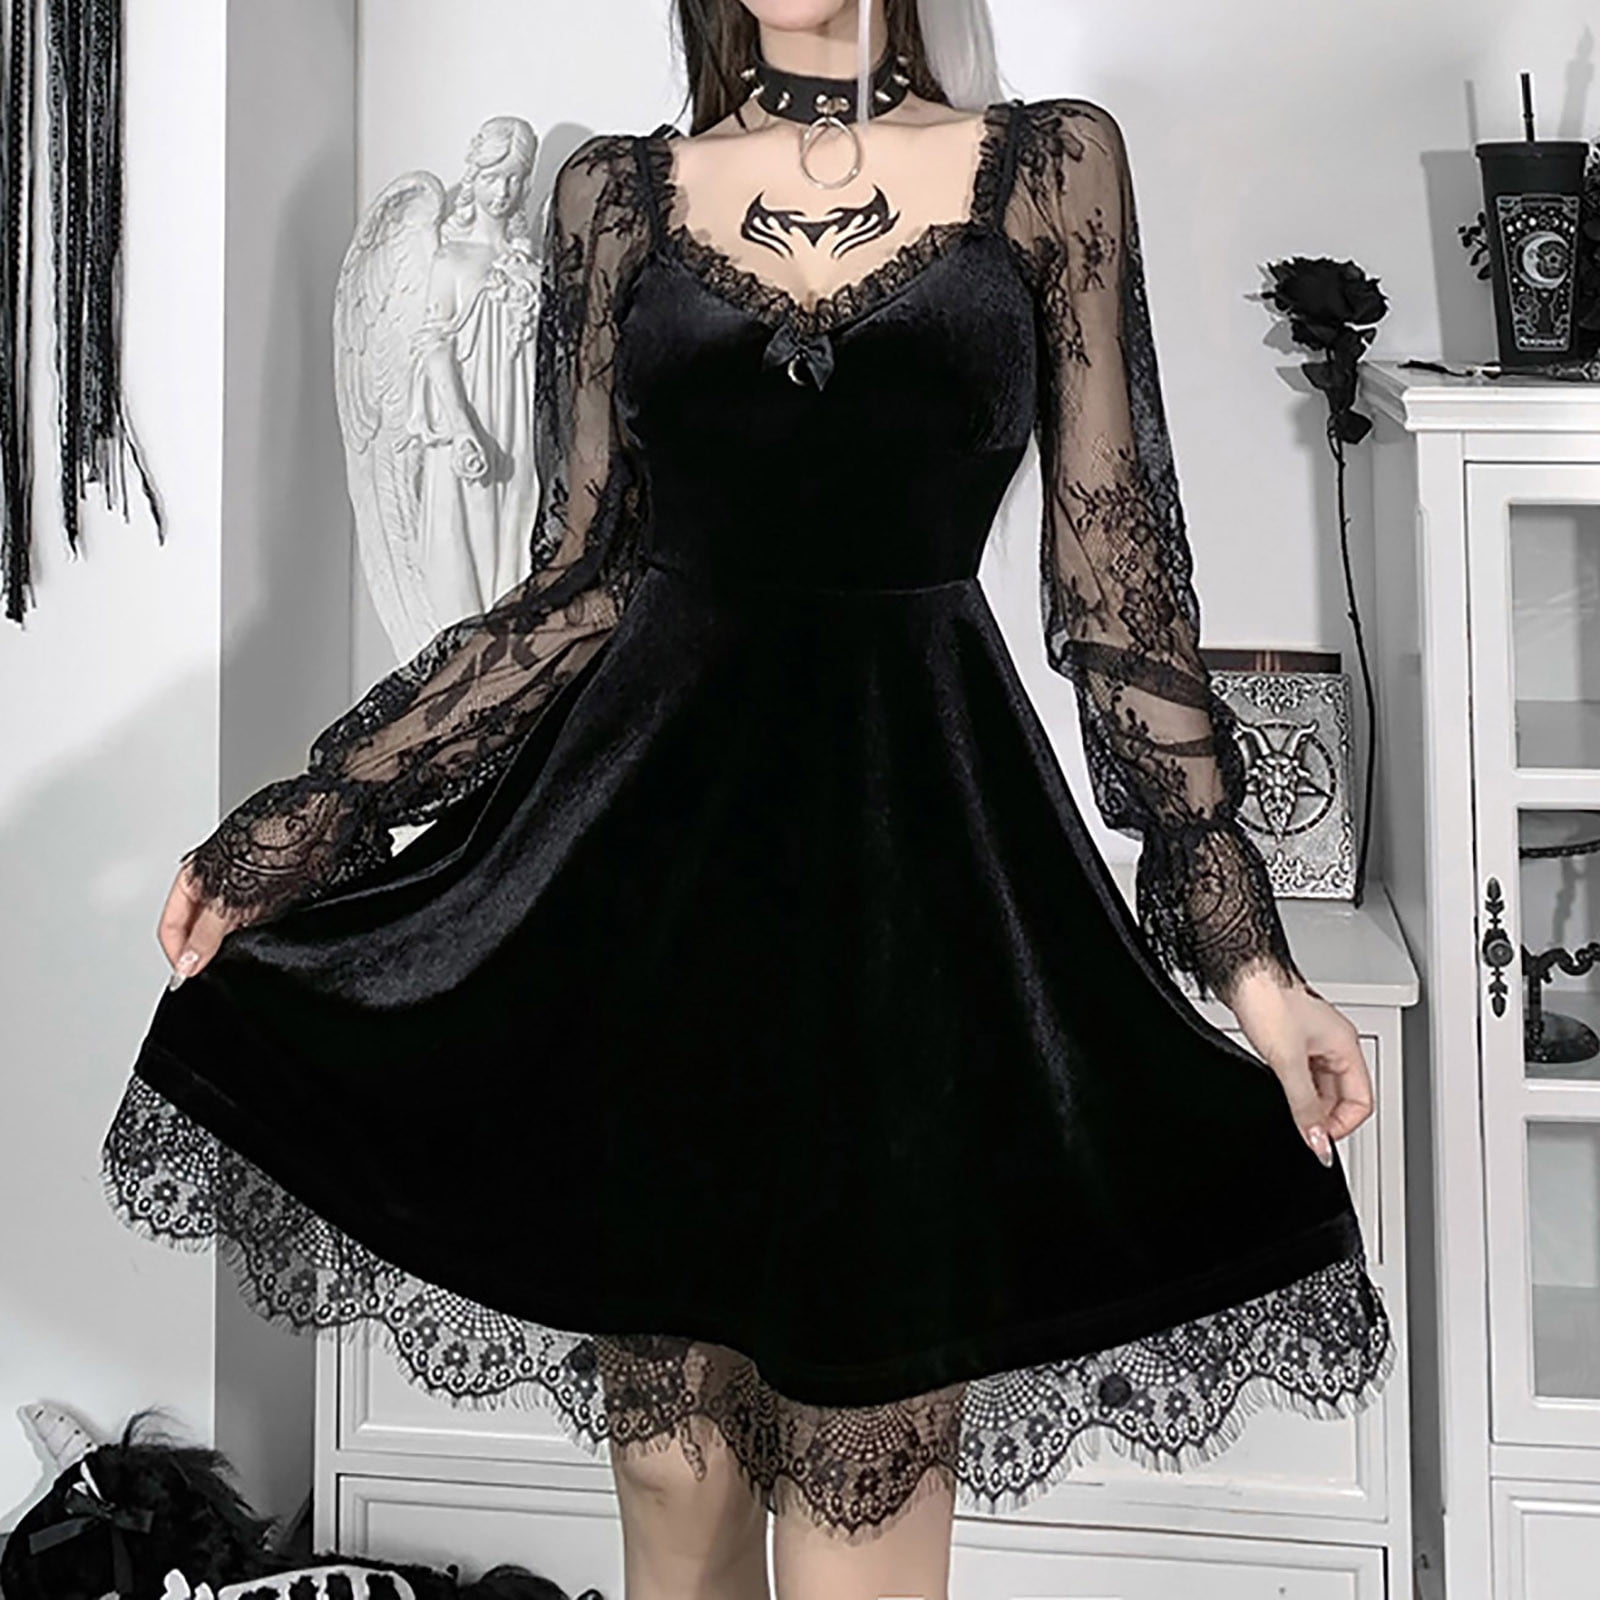 black dress in store